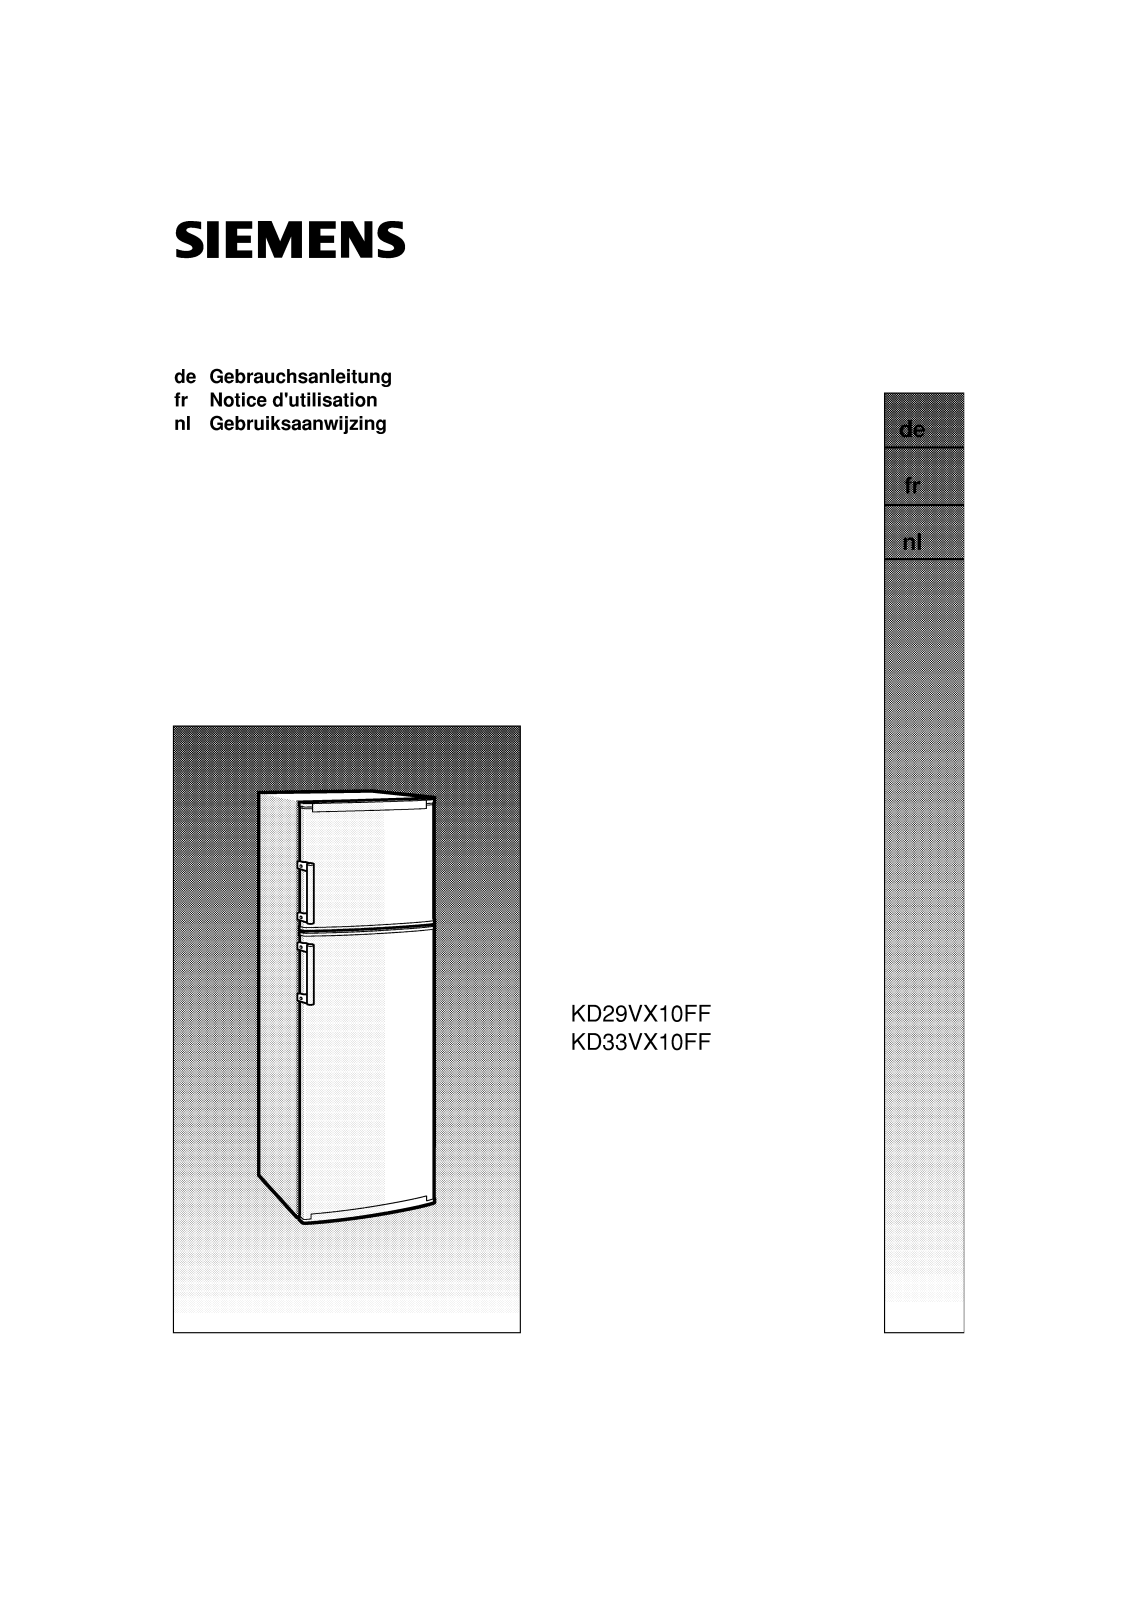 SIEMENS KD33VX10 User Manual